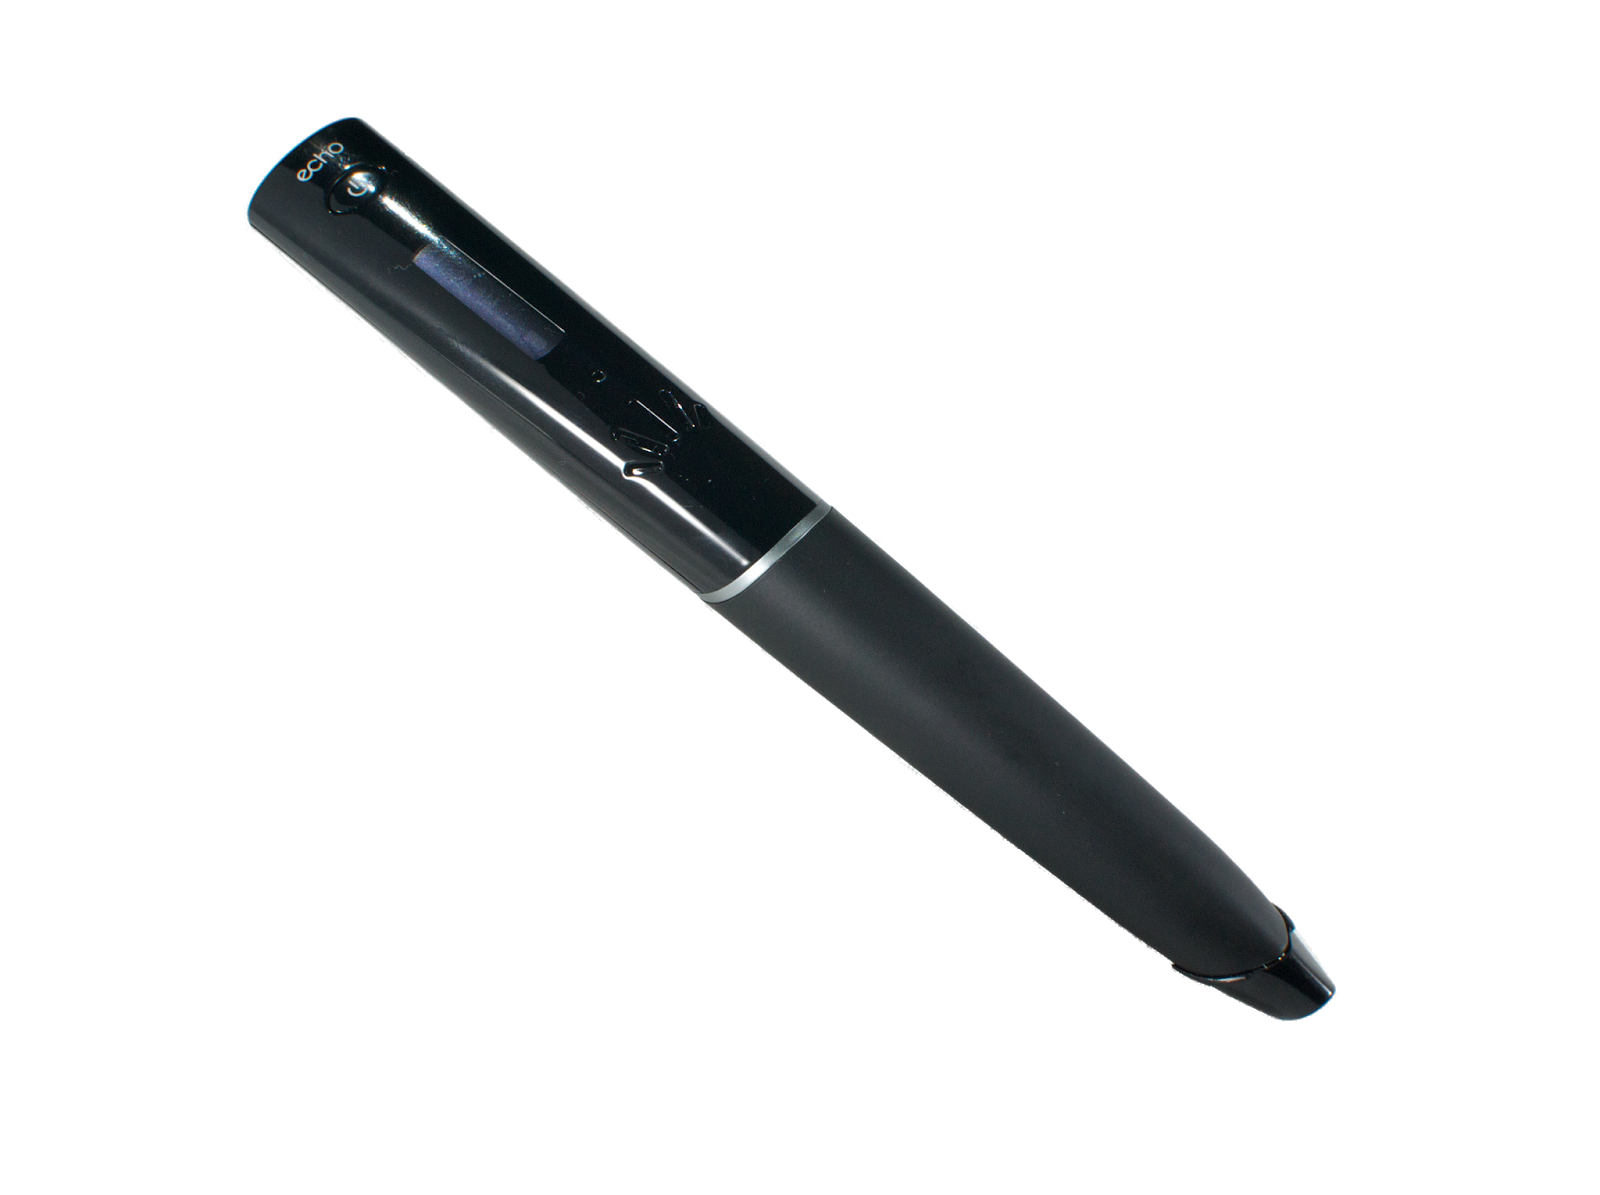 live scribe echo smart pen